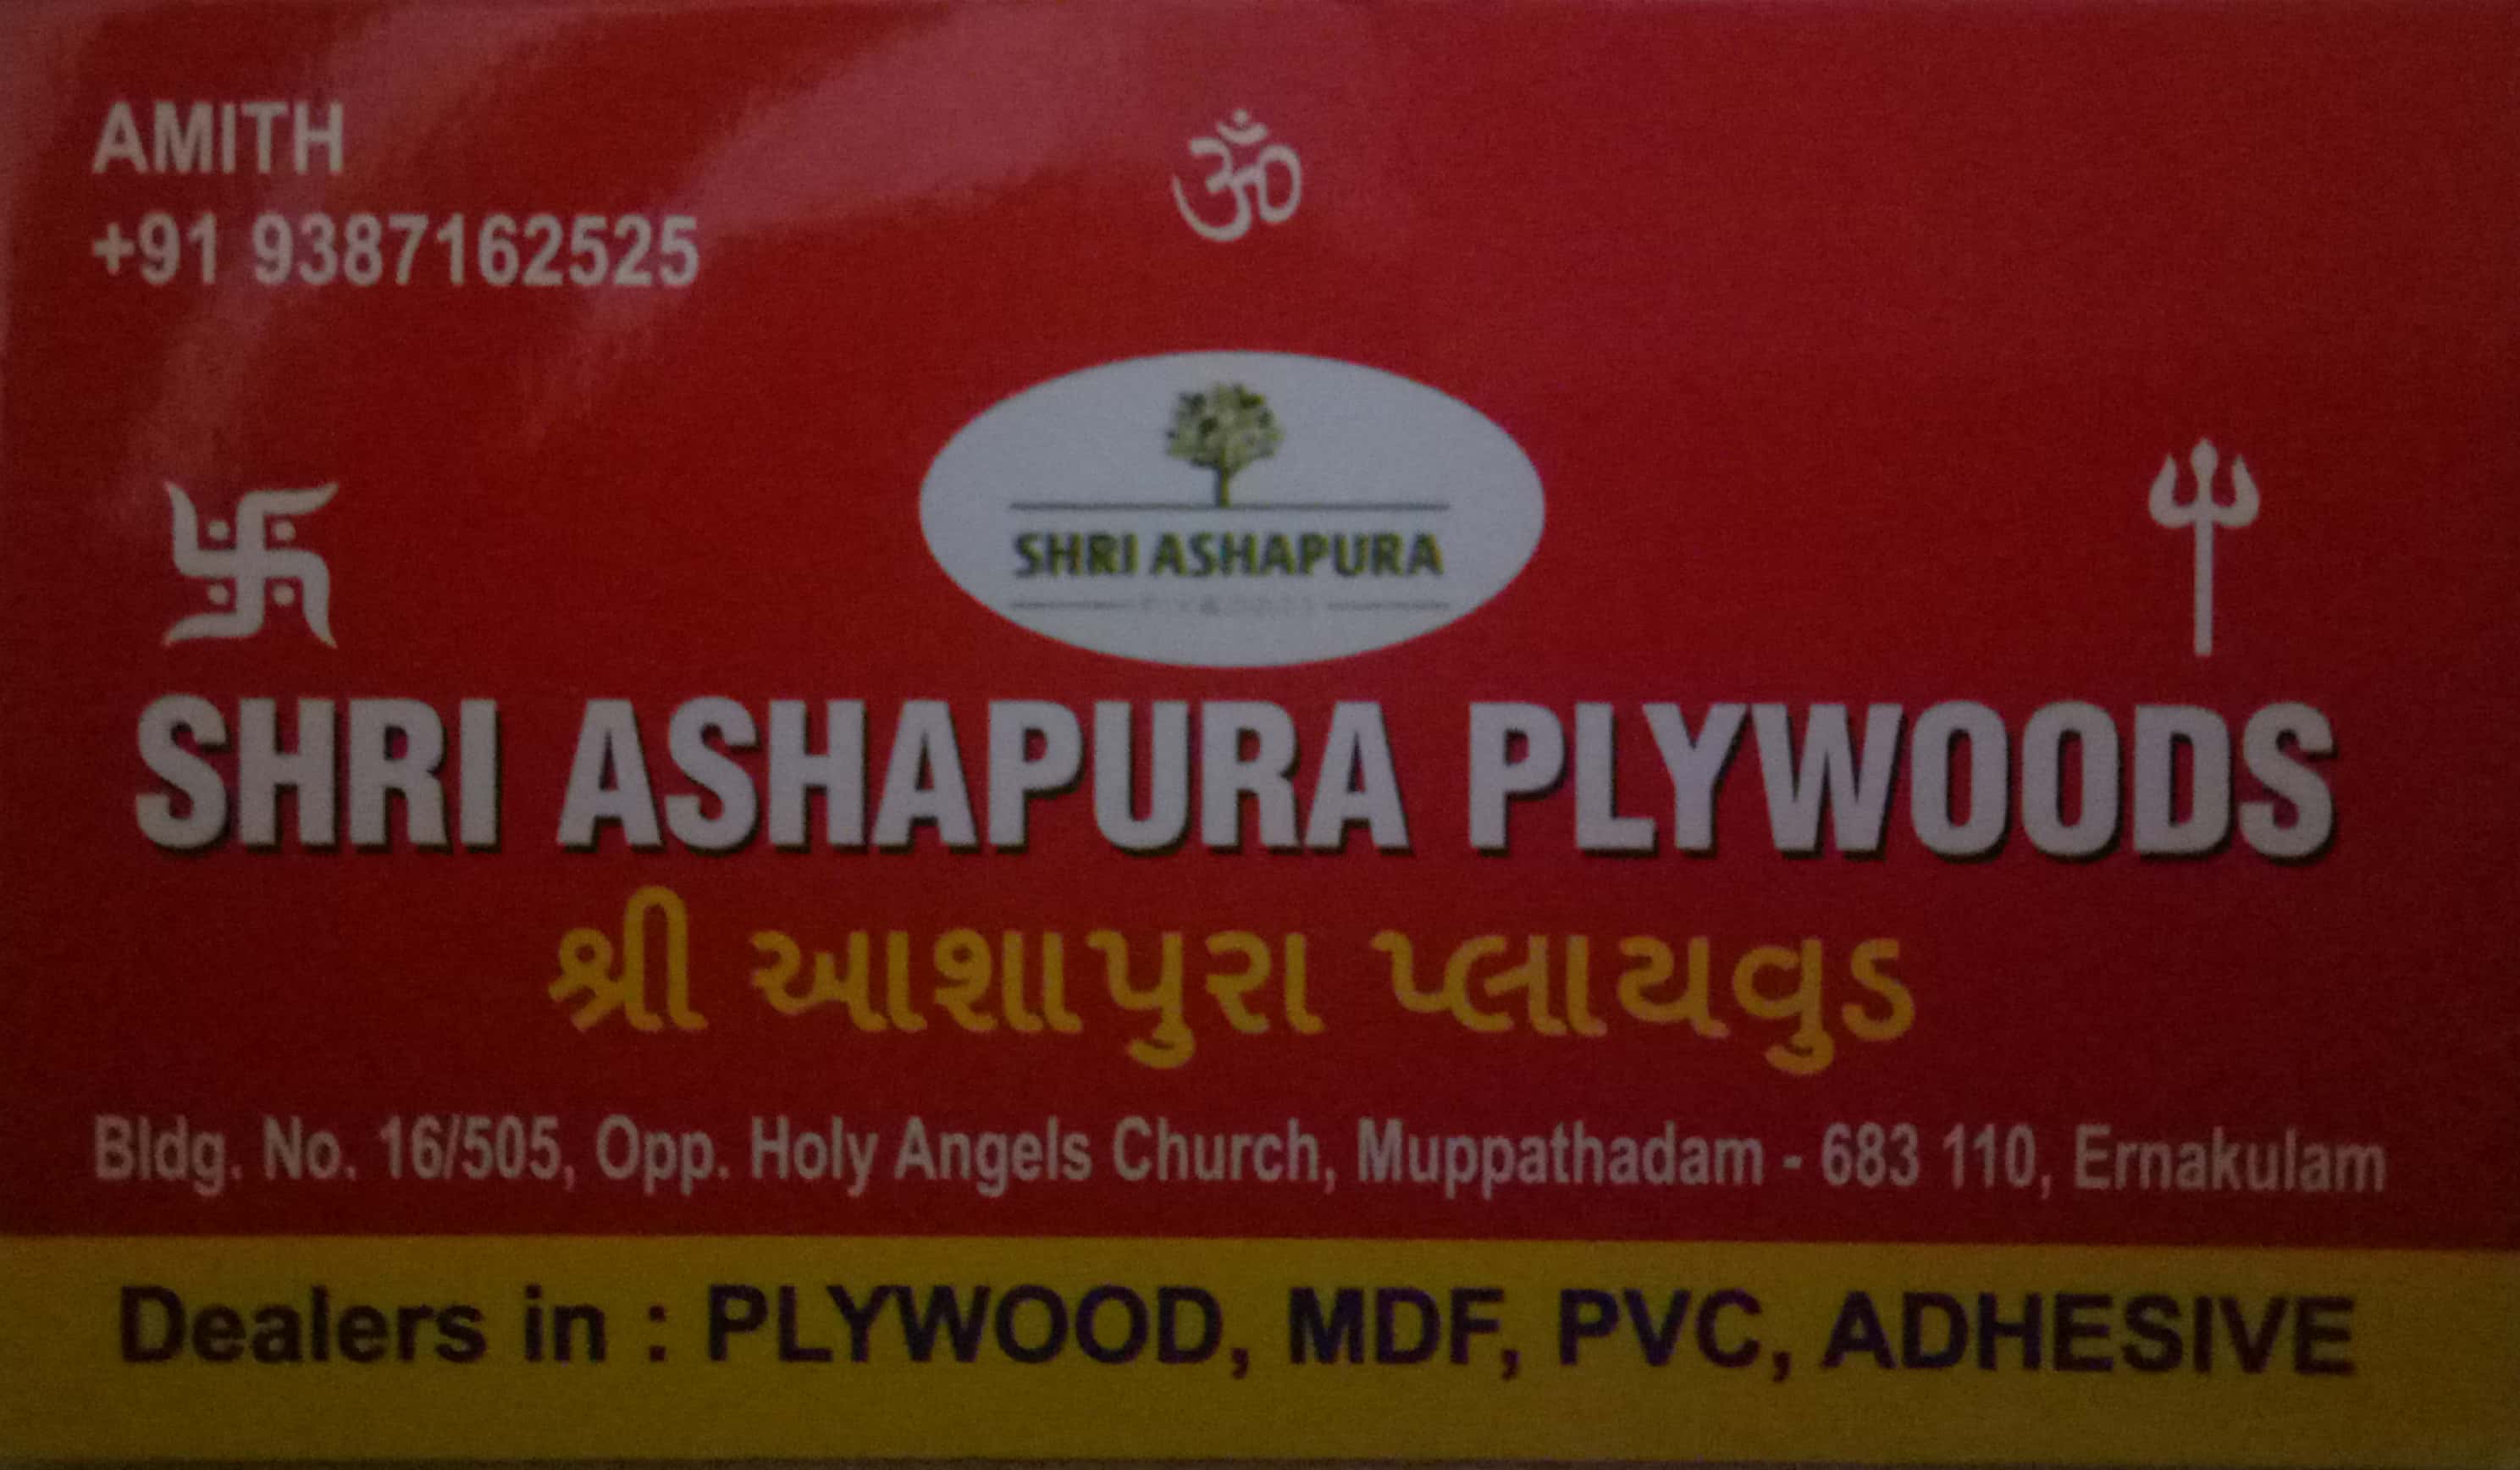 SHRI ASHAPURA PLYWOODS, GLASS & PLYWOOD,  service in Aluva, Ernakulam